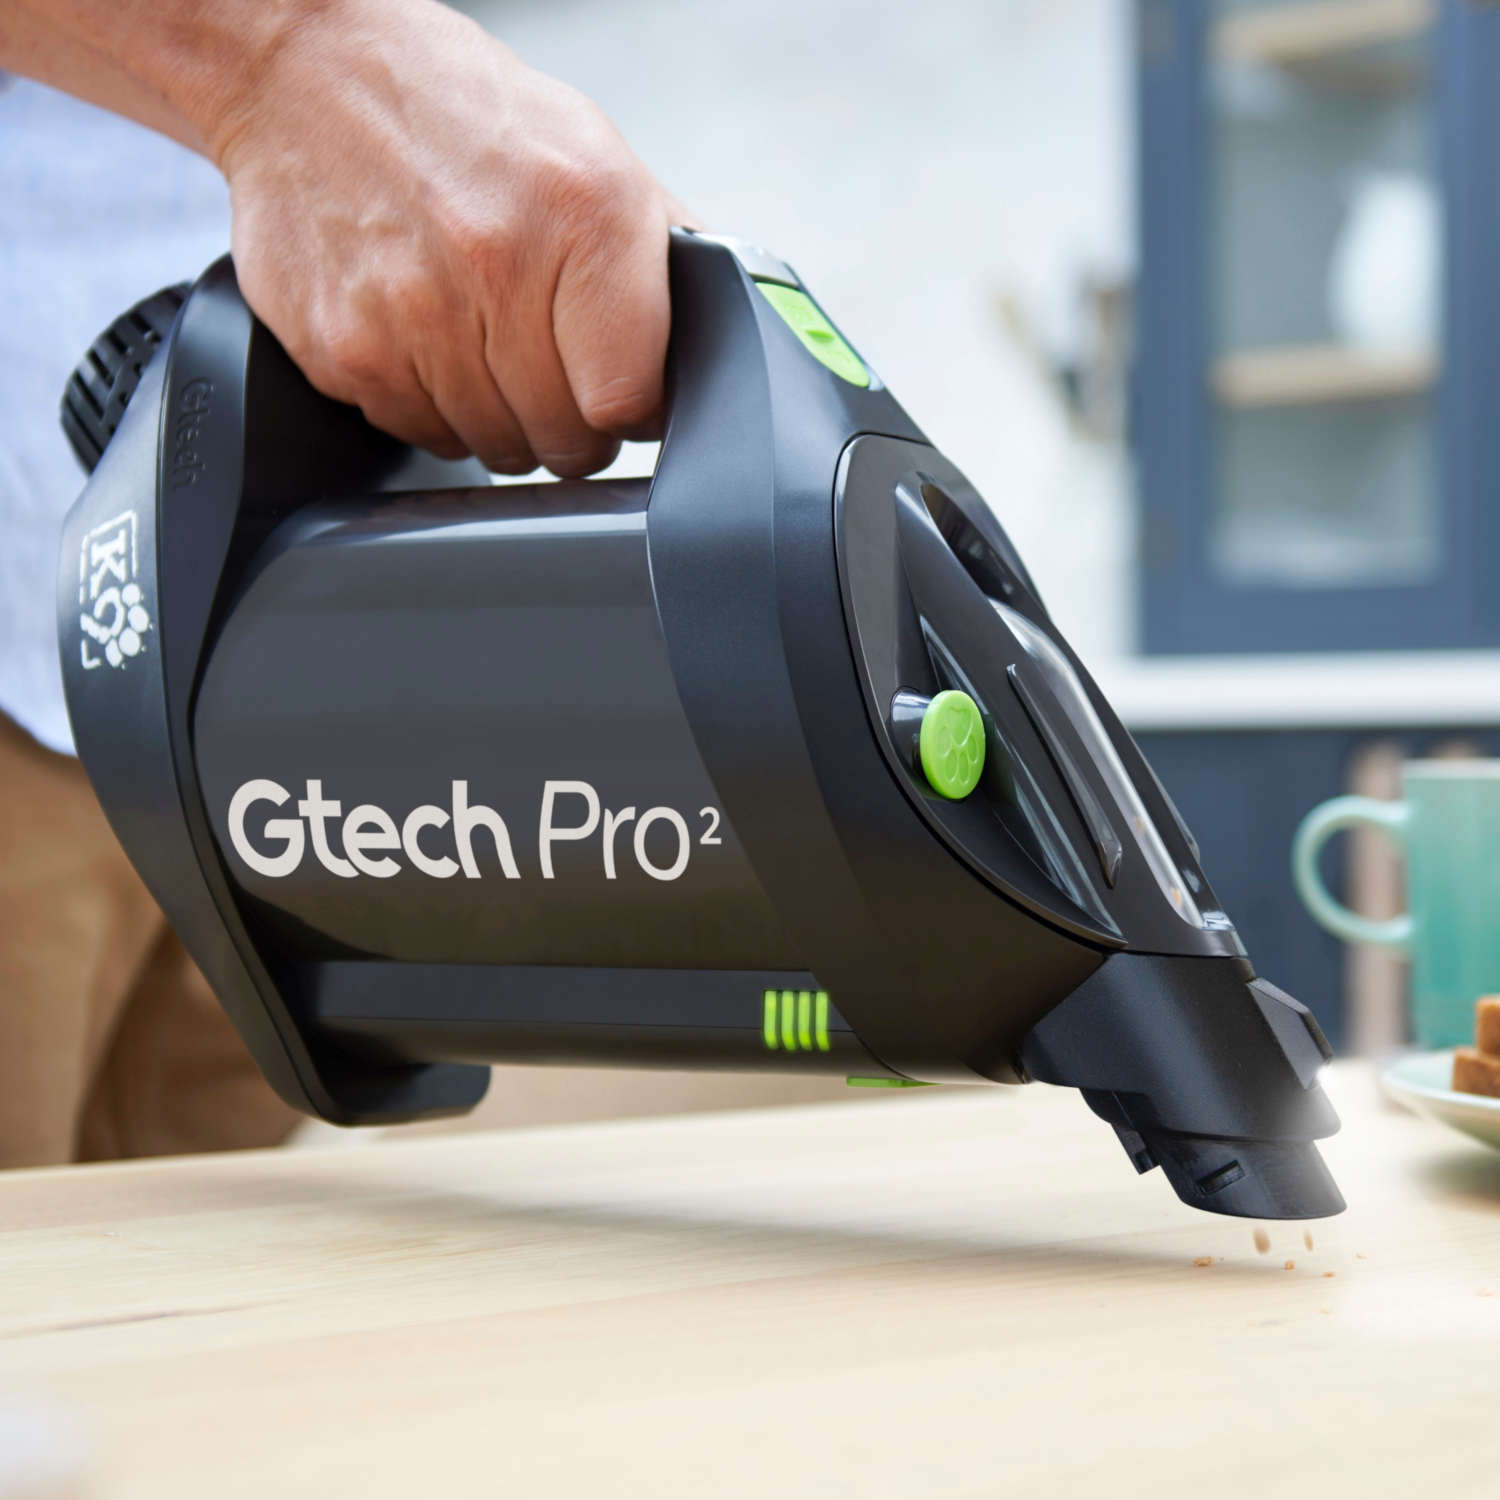 Der Gtech Pro Bag 2 K9 eignet sich auch perfekt als Handstaubsauger